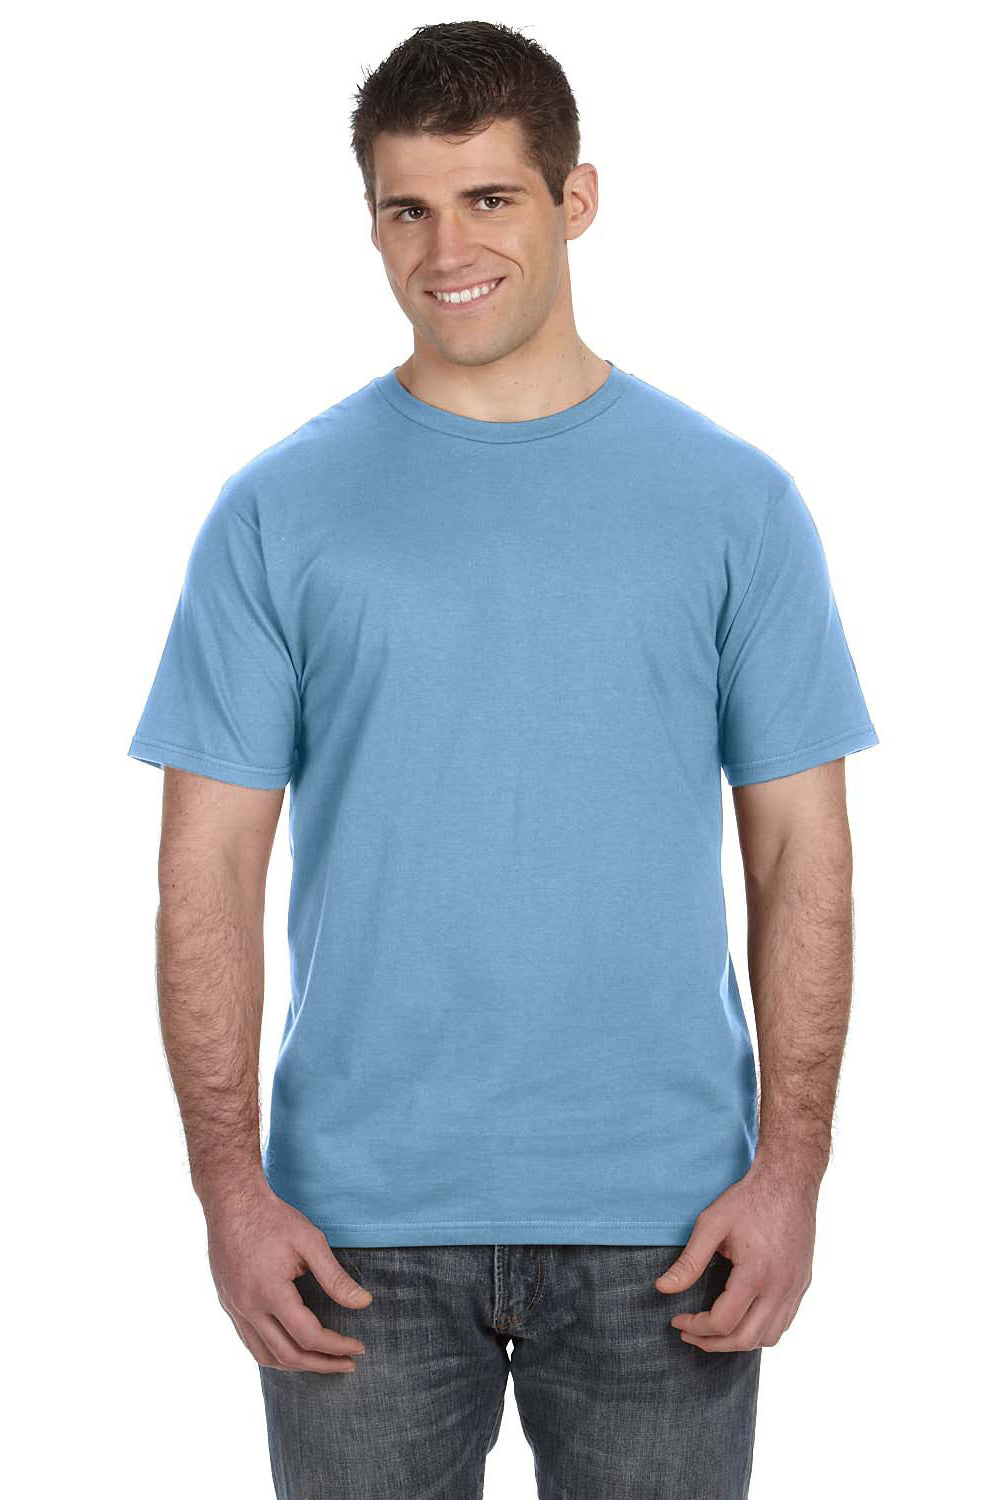 Anvil 980 Mens Short Sleeve Crewneck T-Shirt Light Blue Front